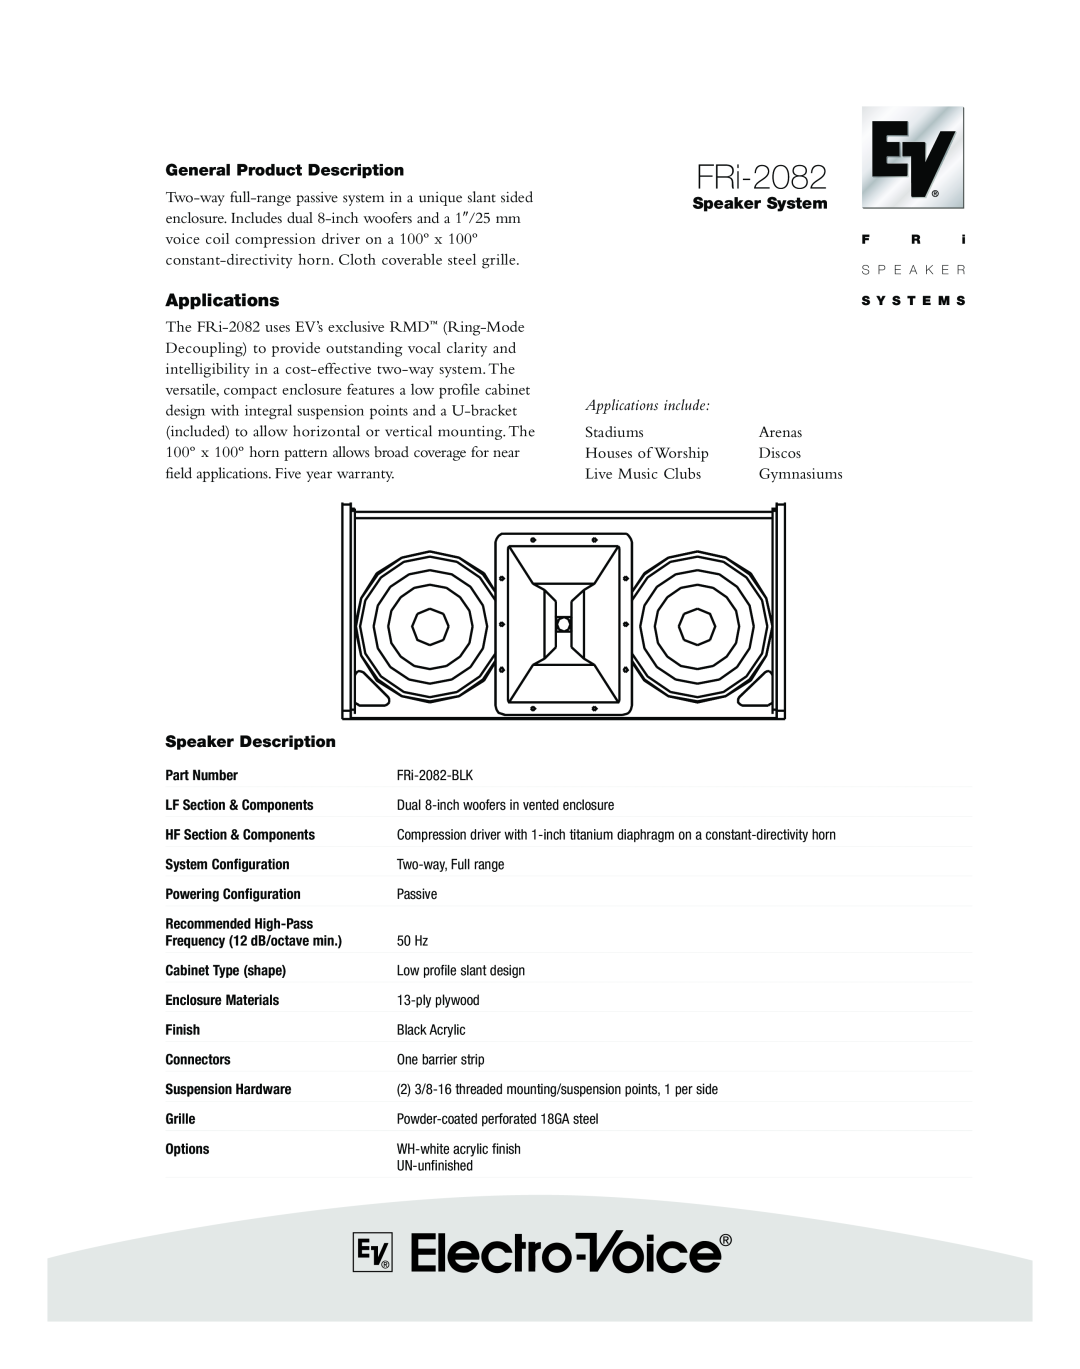 Electro-Voice FRi-2082 warranty Applications, General Product Description, Speaker Description, Speaker System, Stadiums 